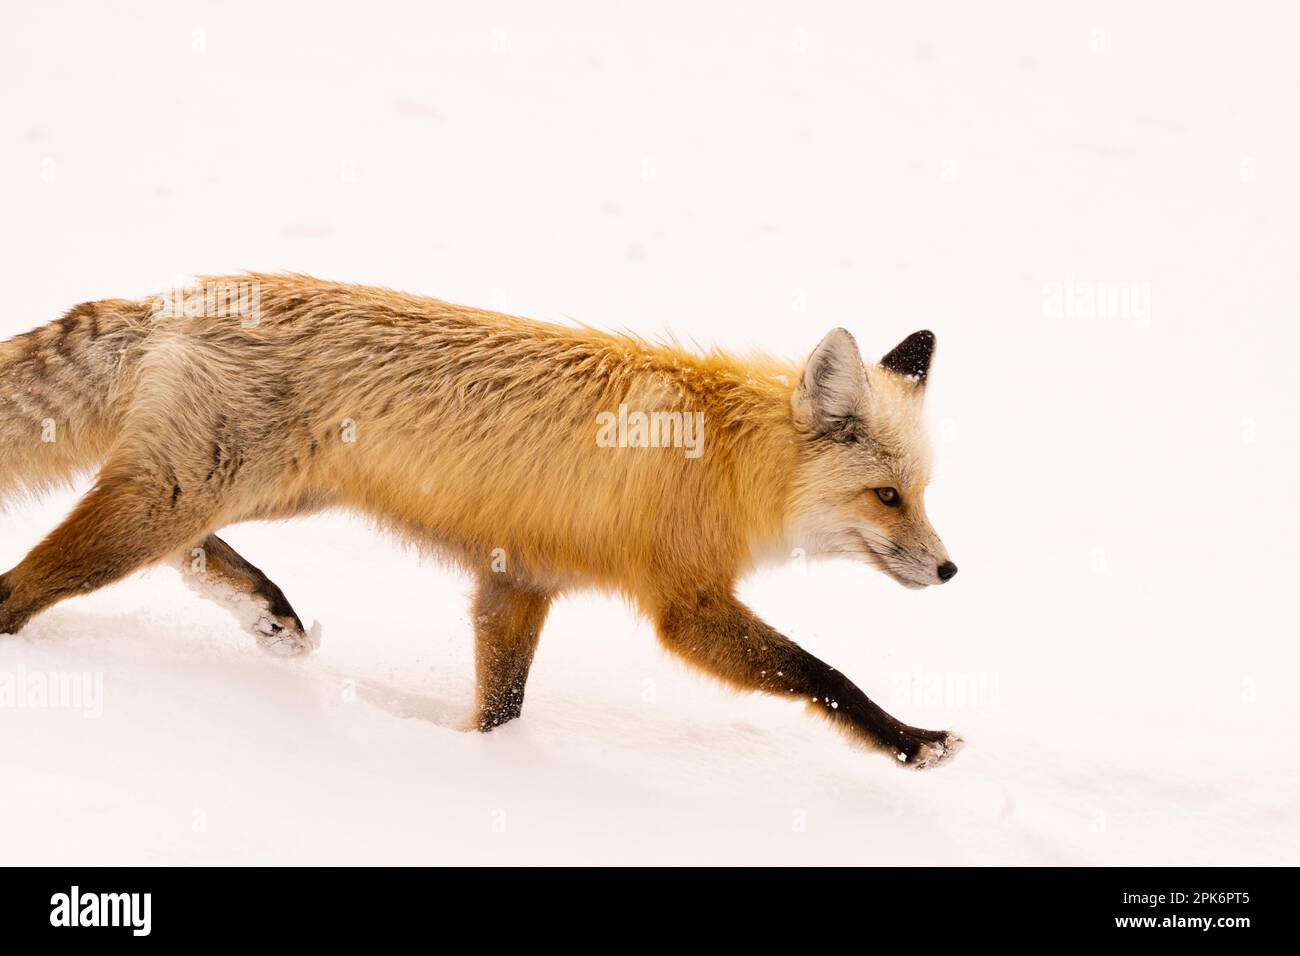 Portrait of fox on road Stock Photo